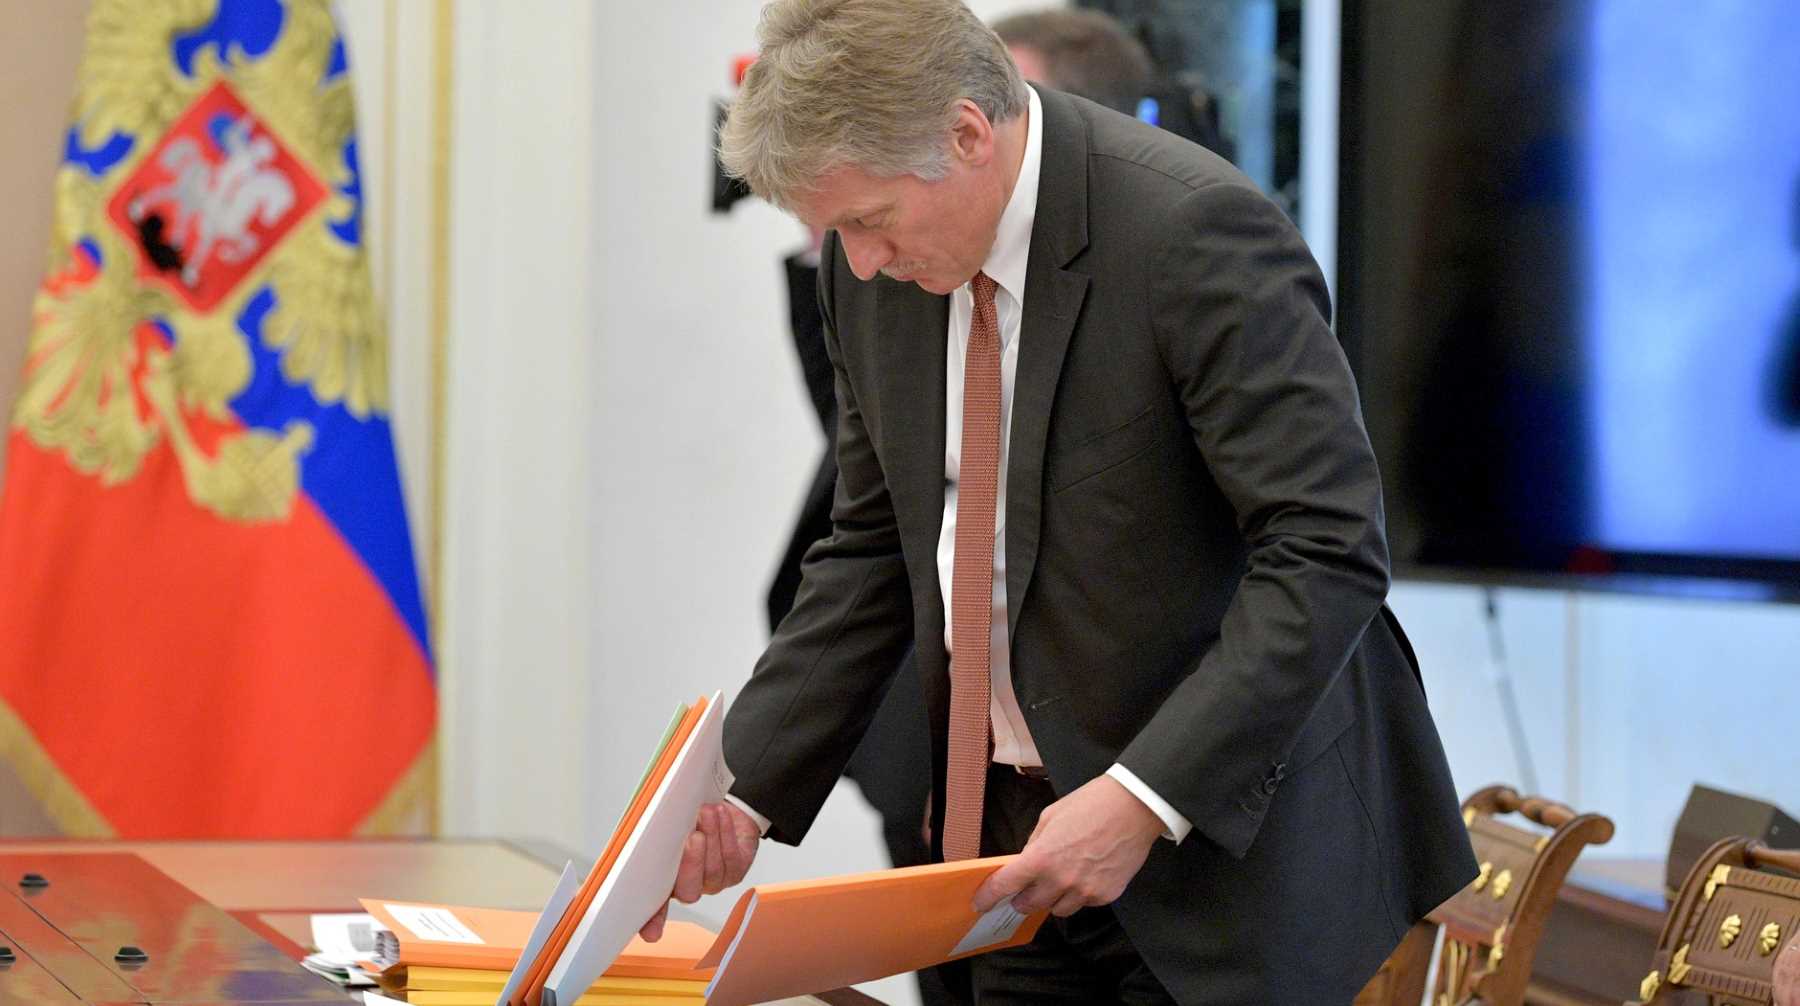 Песков пообещал спросить у президента, о каком пособии он говорил 21 апреля в Манеже Фото: © Global Look Press / Kremlin Pool